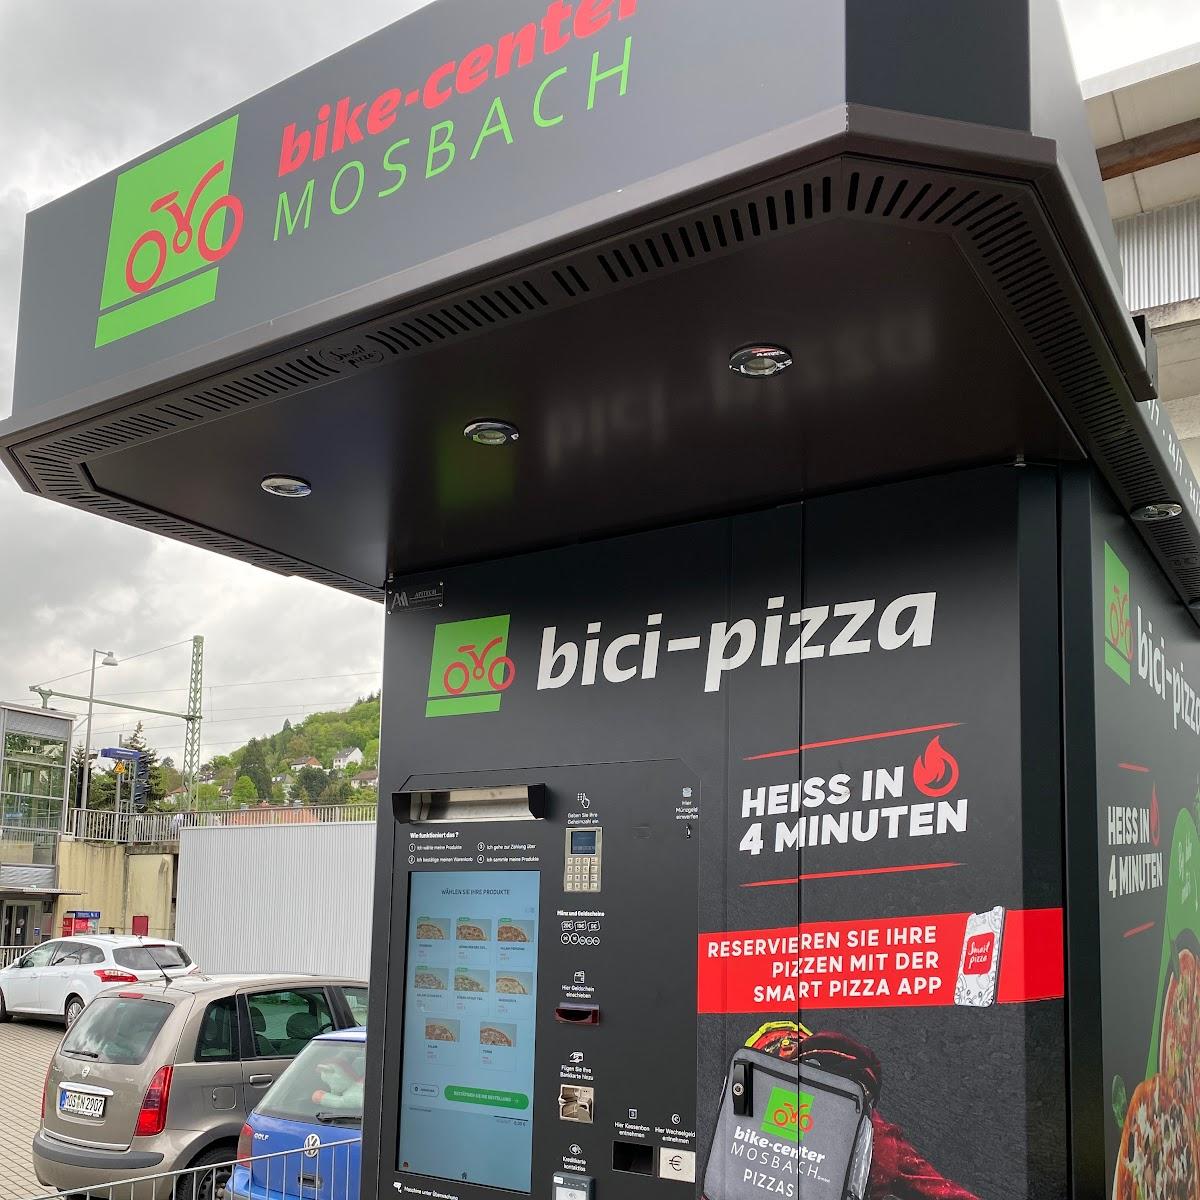 Restaurant "bici-Pizza" in Mosbach